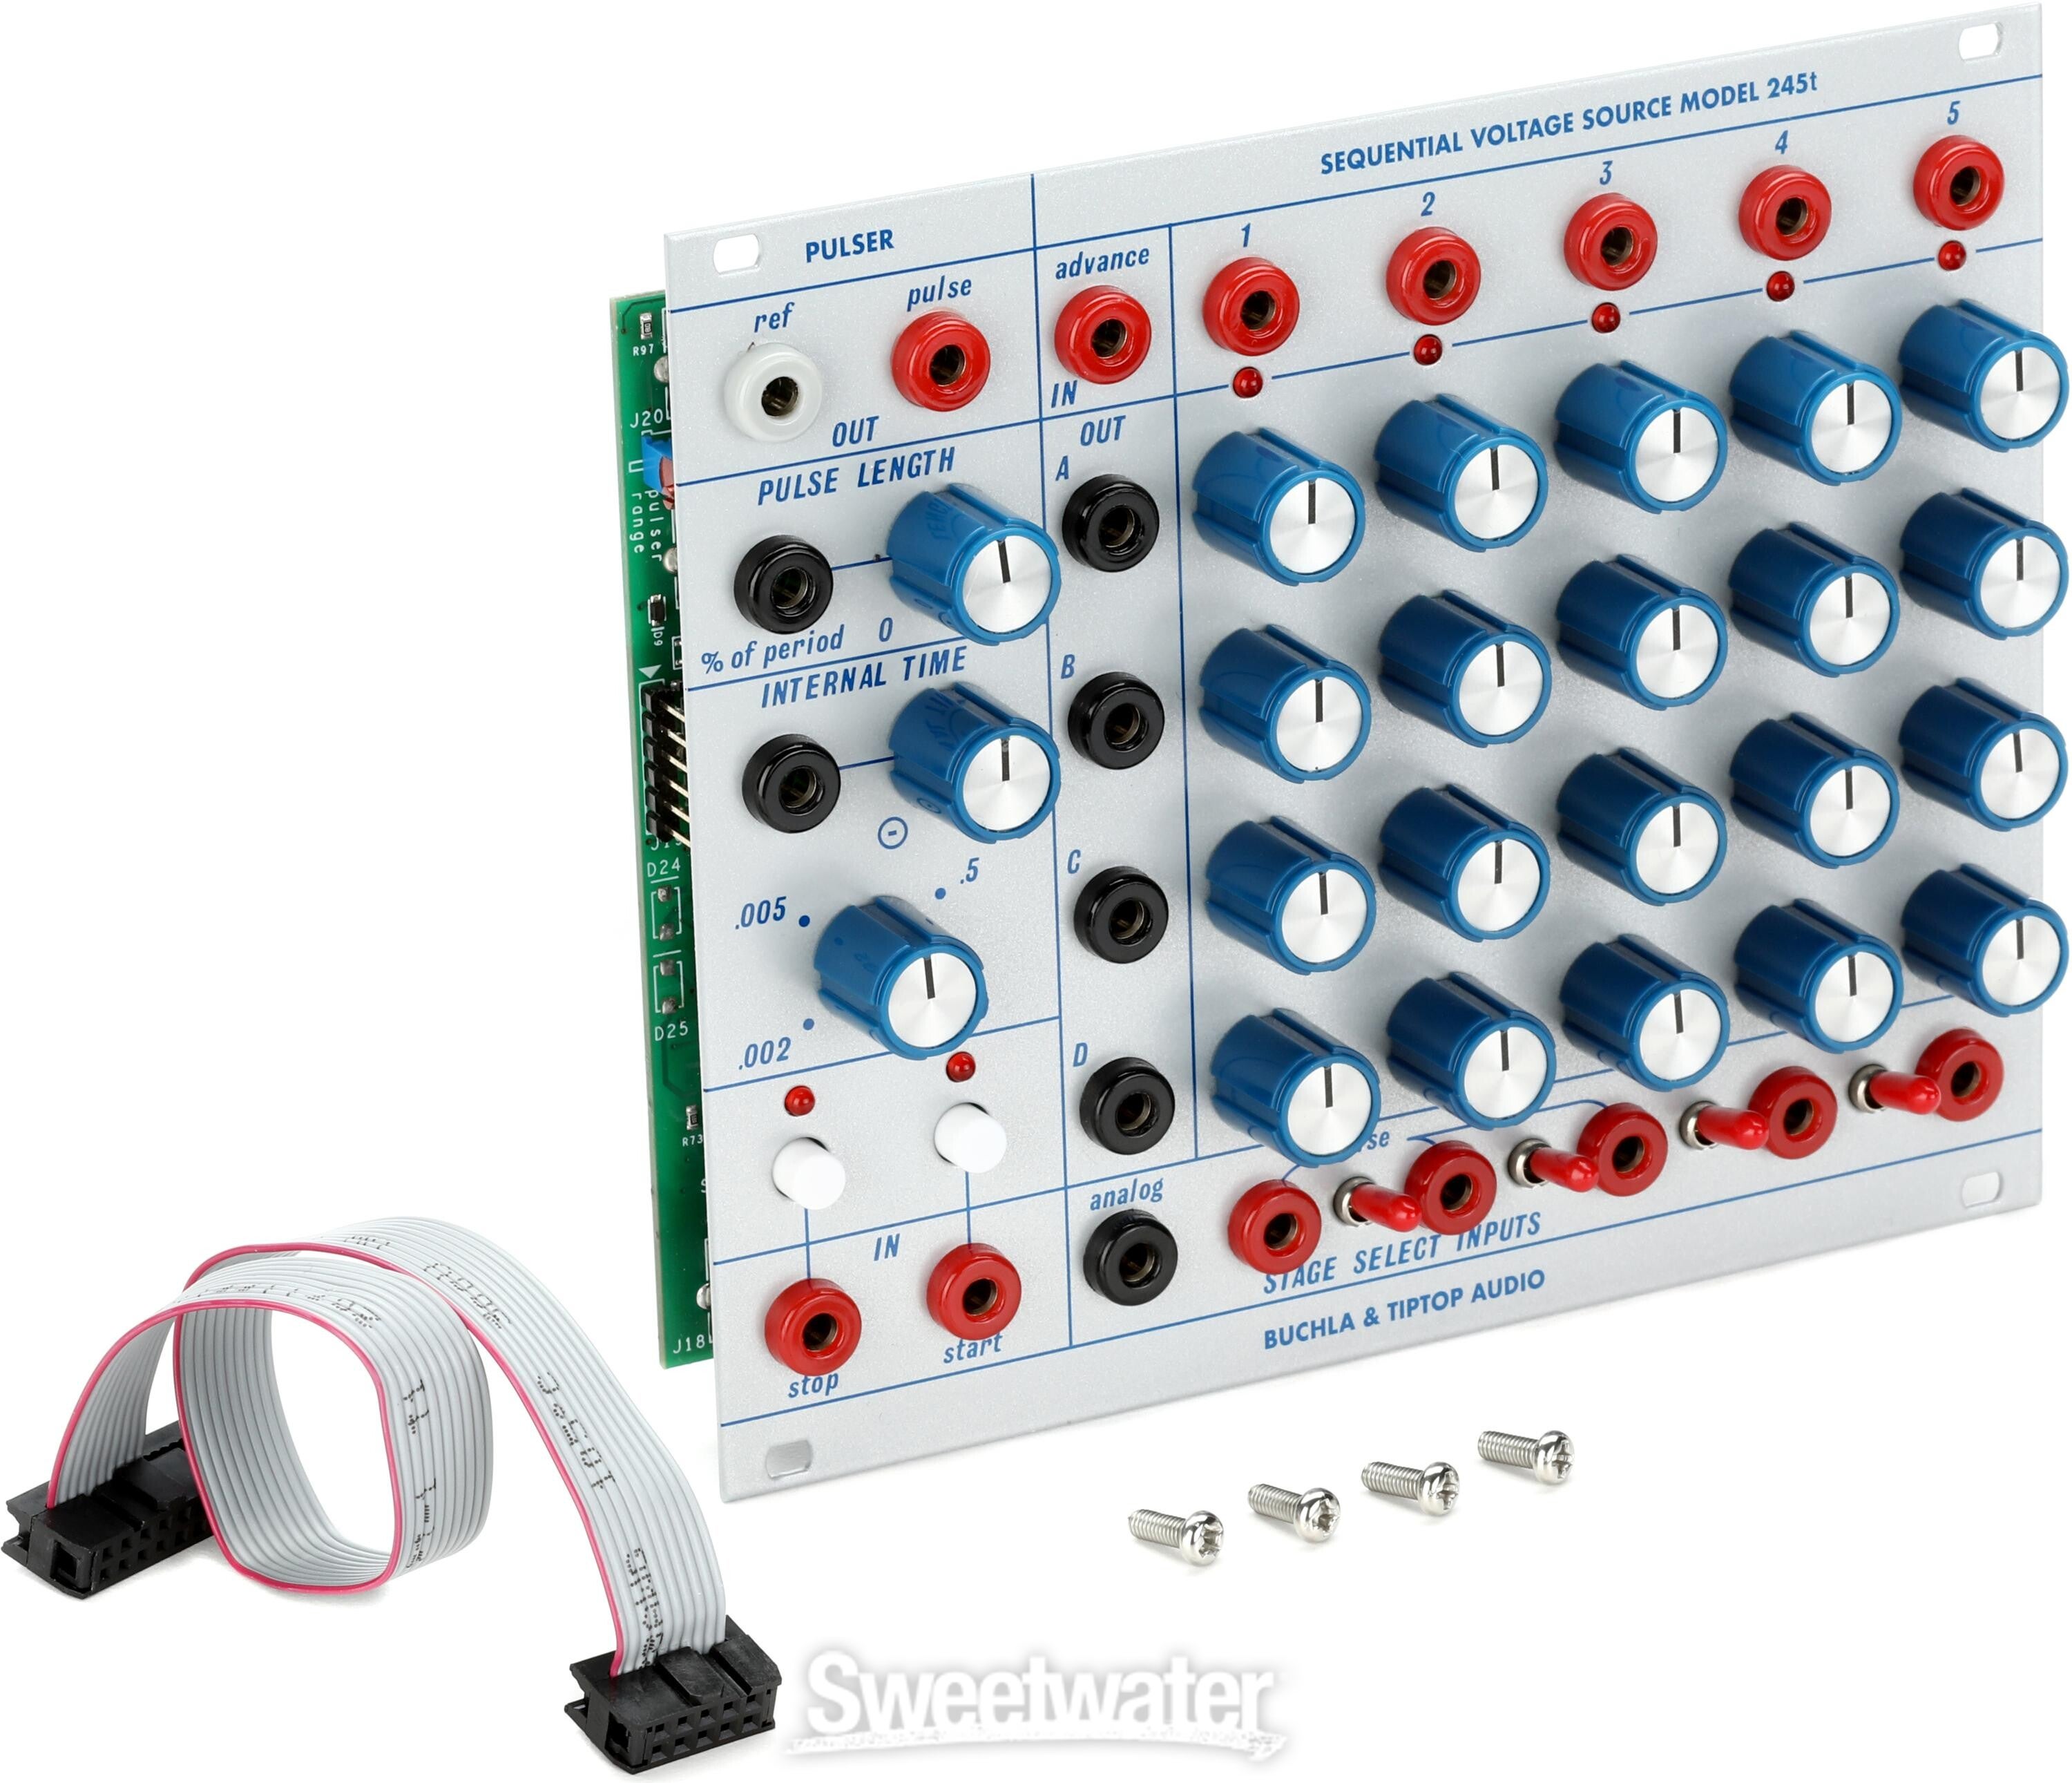 Tiptop Audio Buchla 245t Sequential Voltage Source Eurorack Module